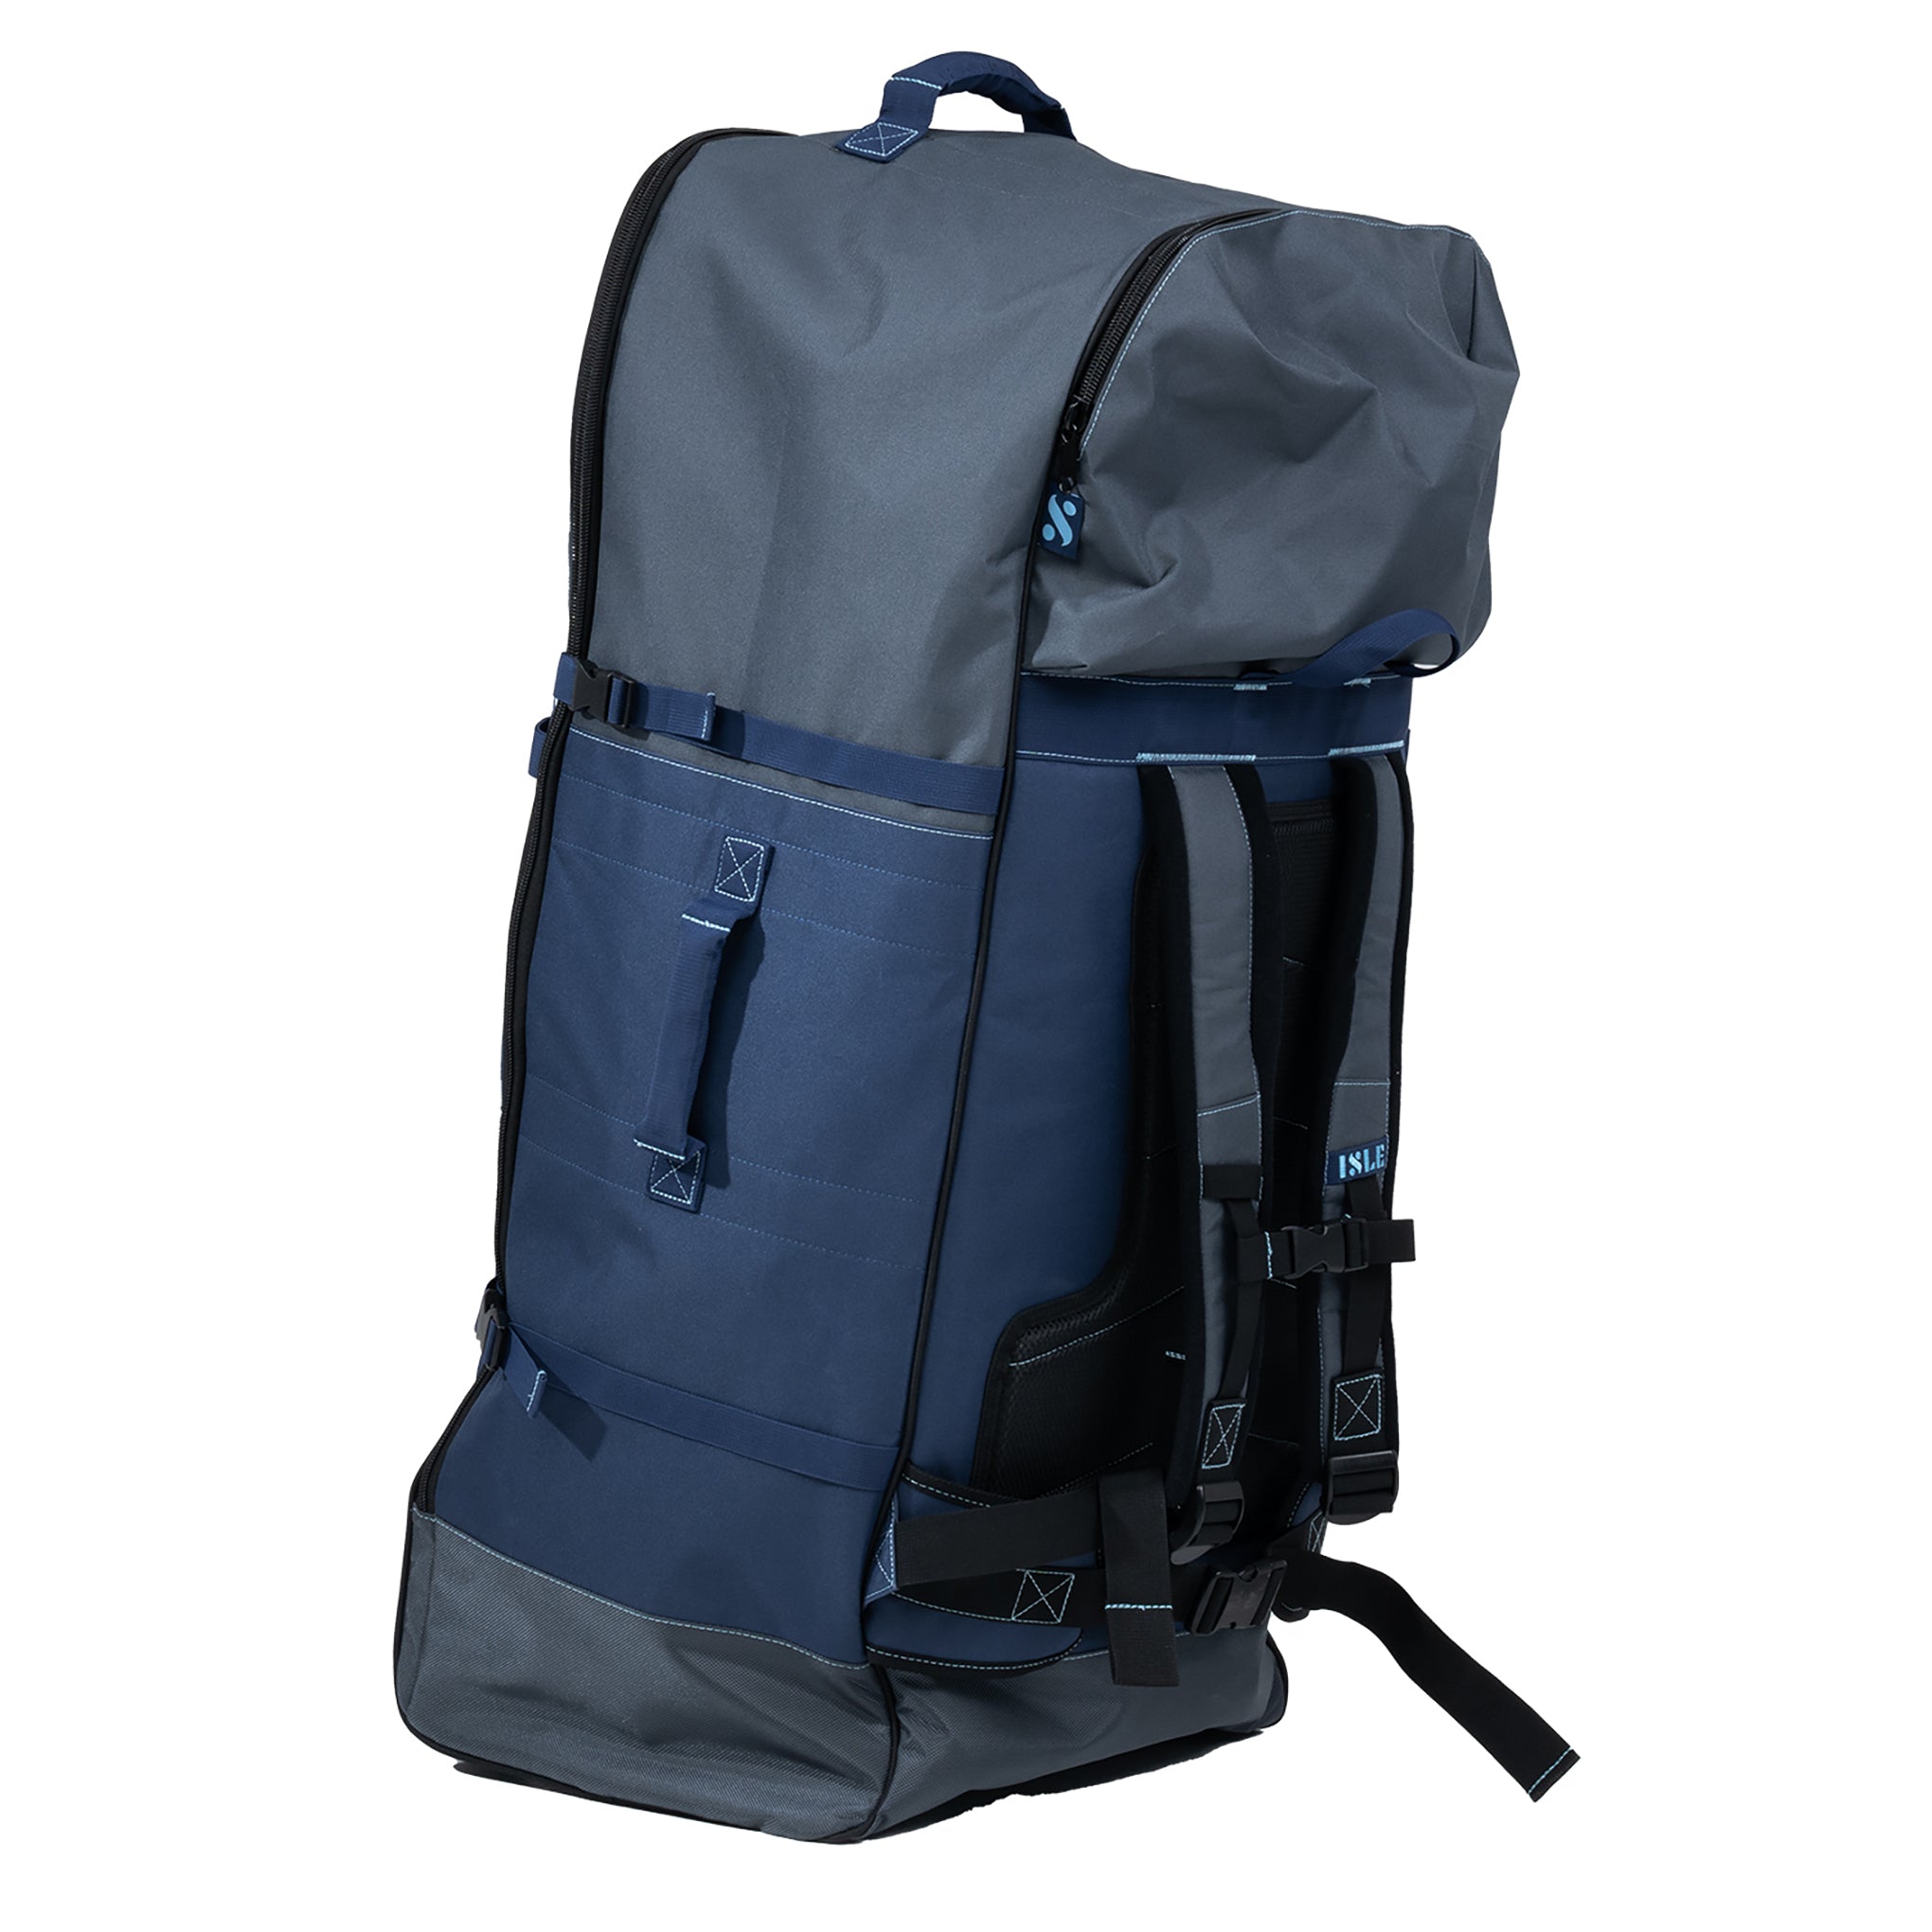 Pro Series Wheelie Backpack Side View